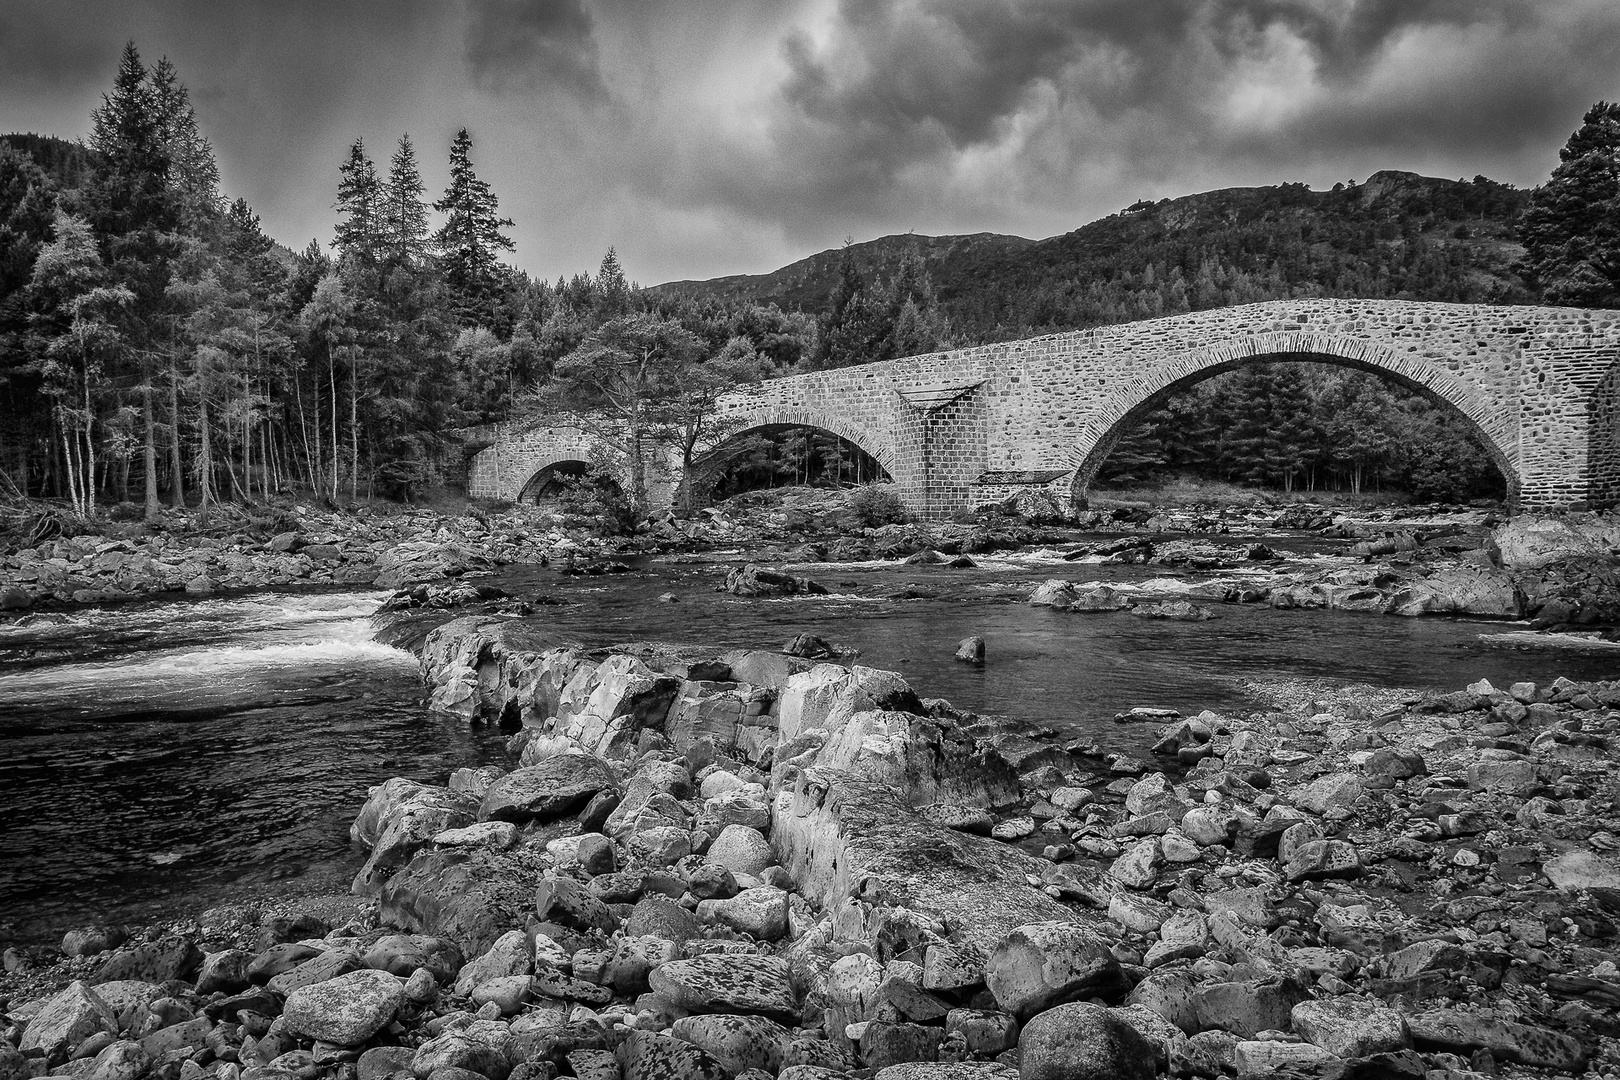 River Dee - Scotland 2017